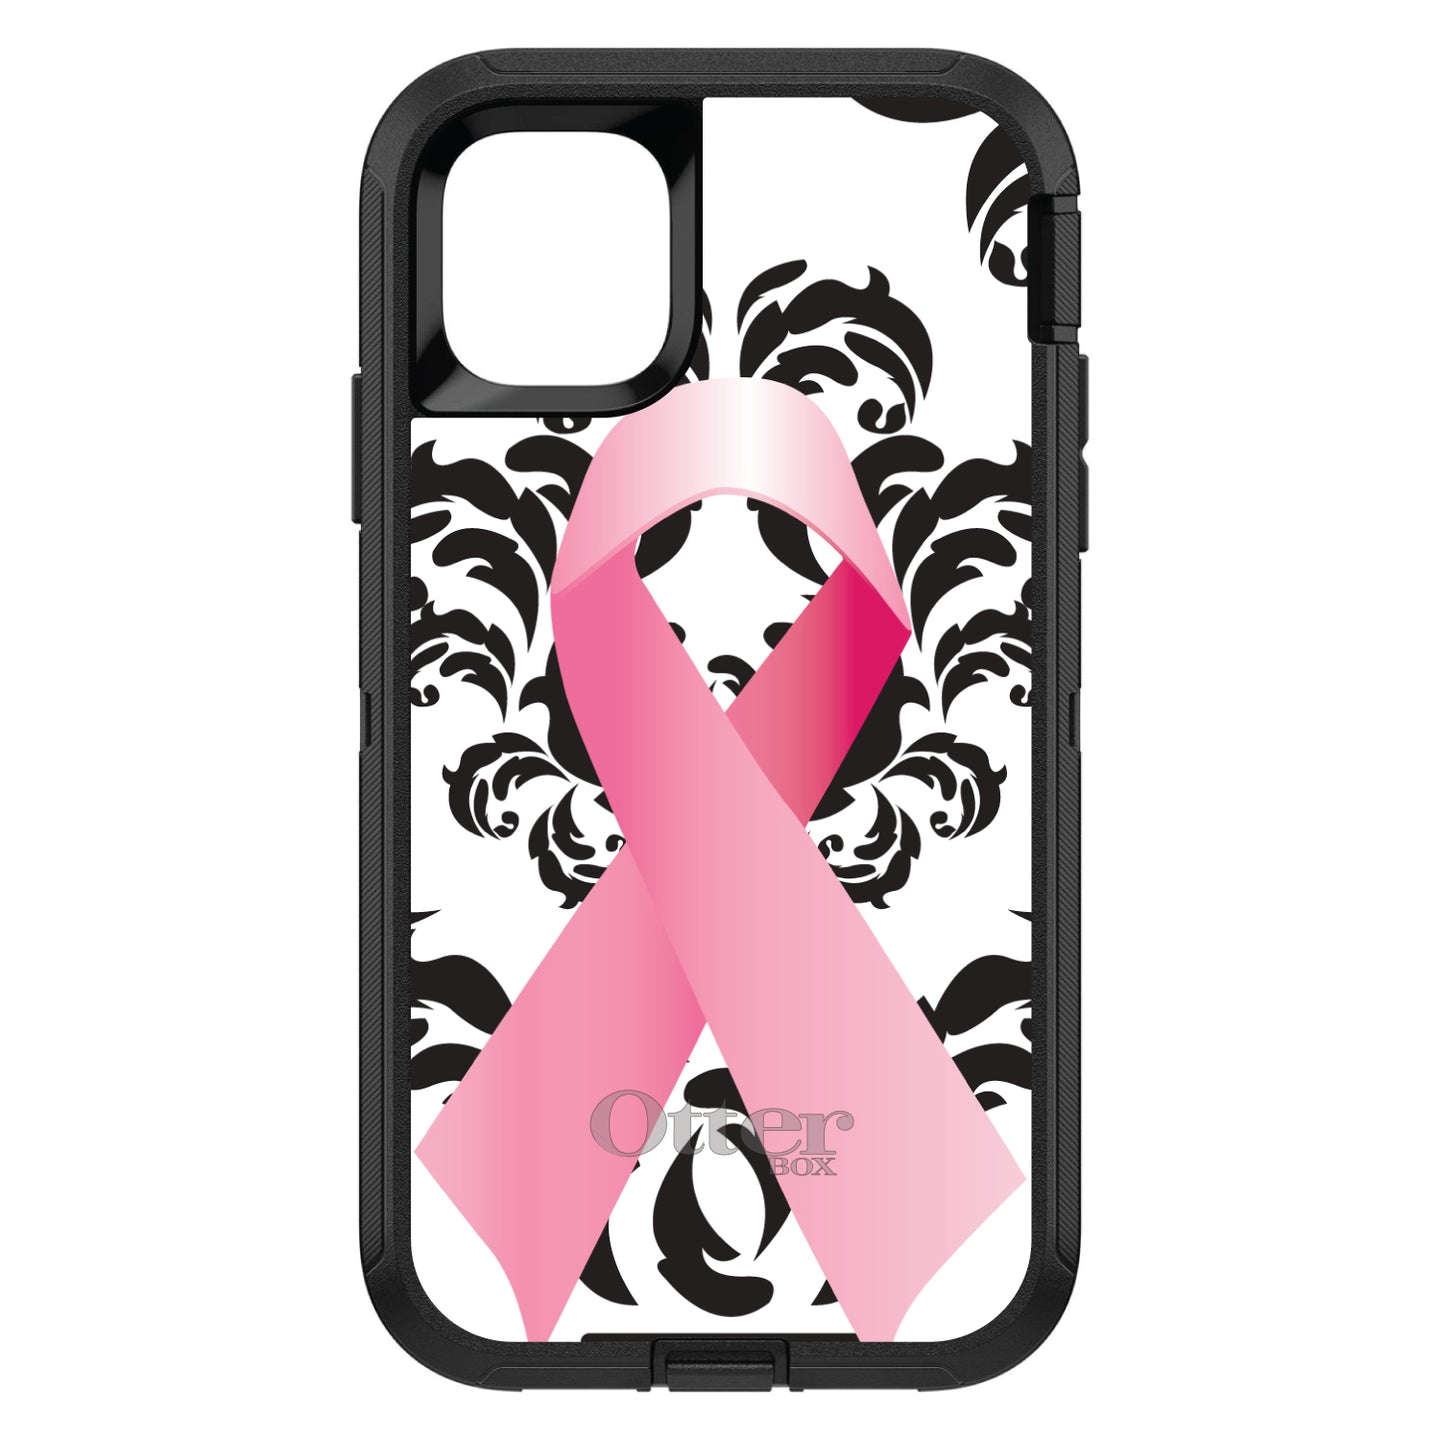 DistinctInk™ OtterBox Defender Series Case for Apple iPhone / Samsung Galaxy / Google Pixel - Black Damask Pink Ribbon